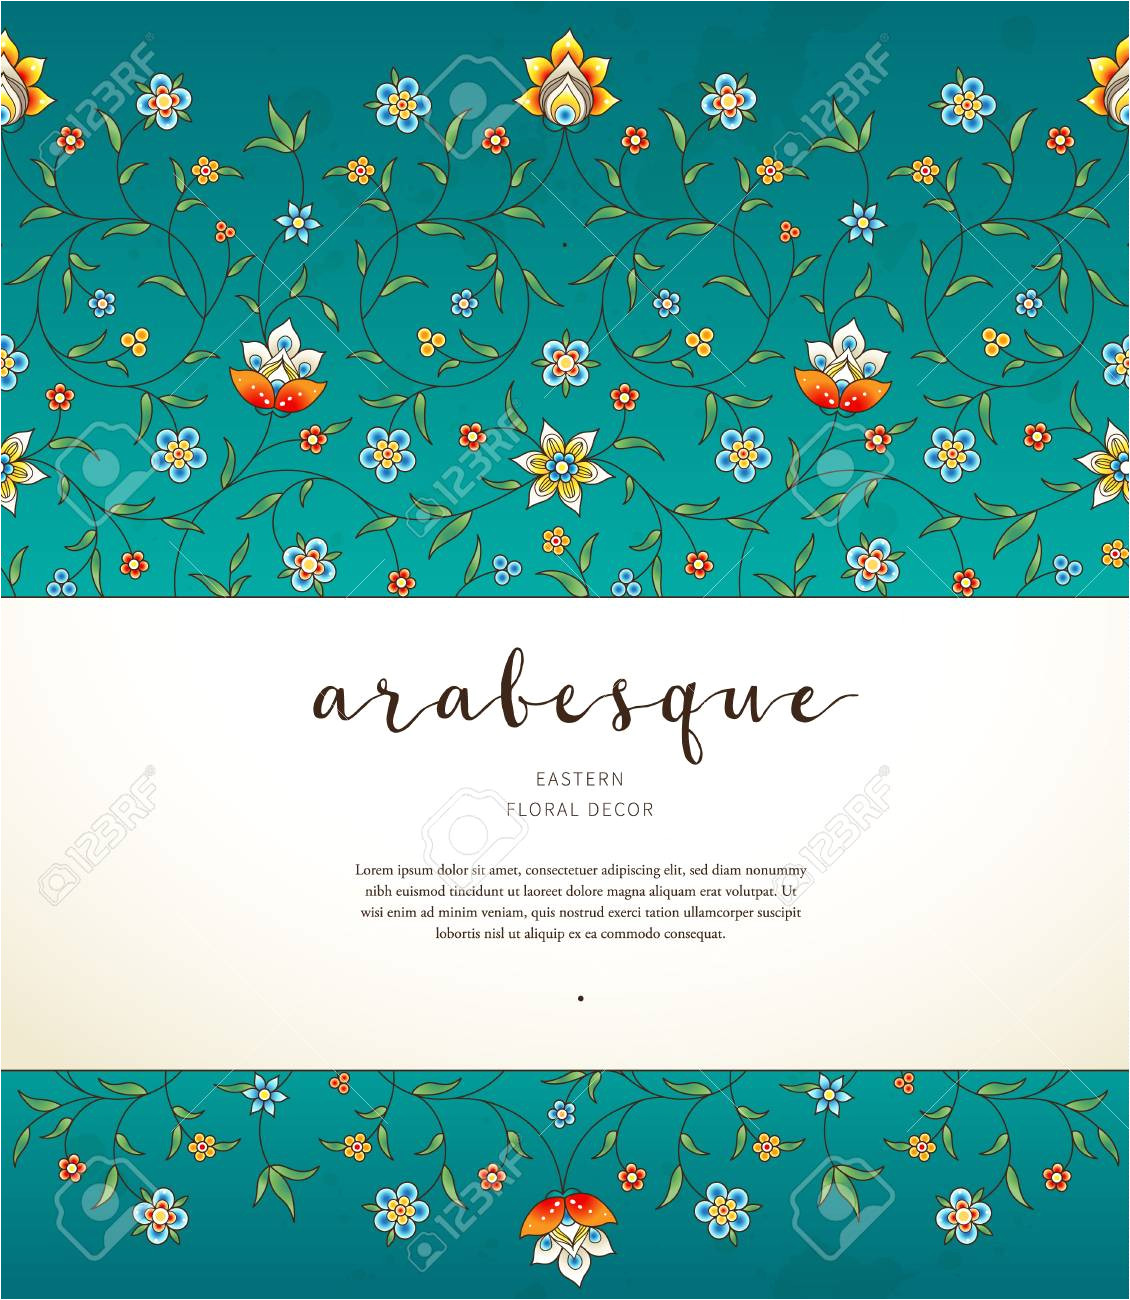 77891126 vector vintage decor ornate seamless border for design template eastern style element luxury floral jpg